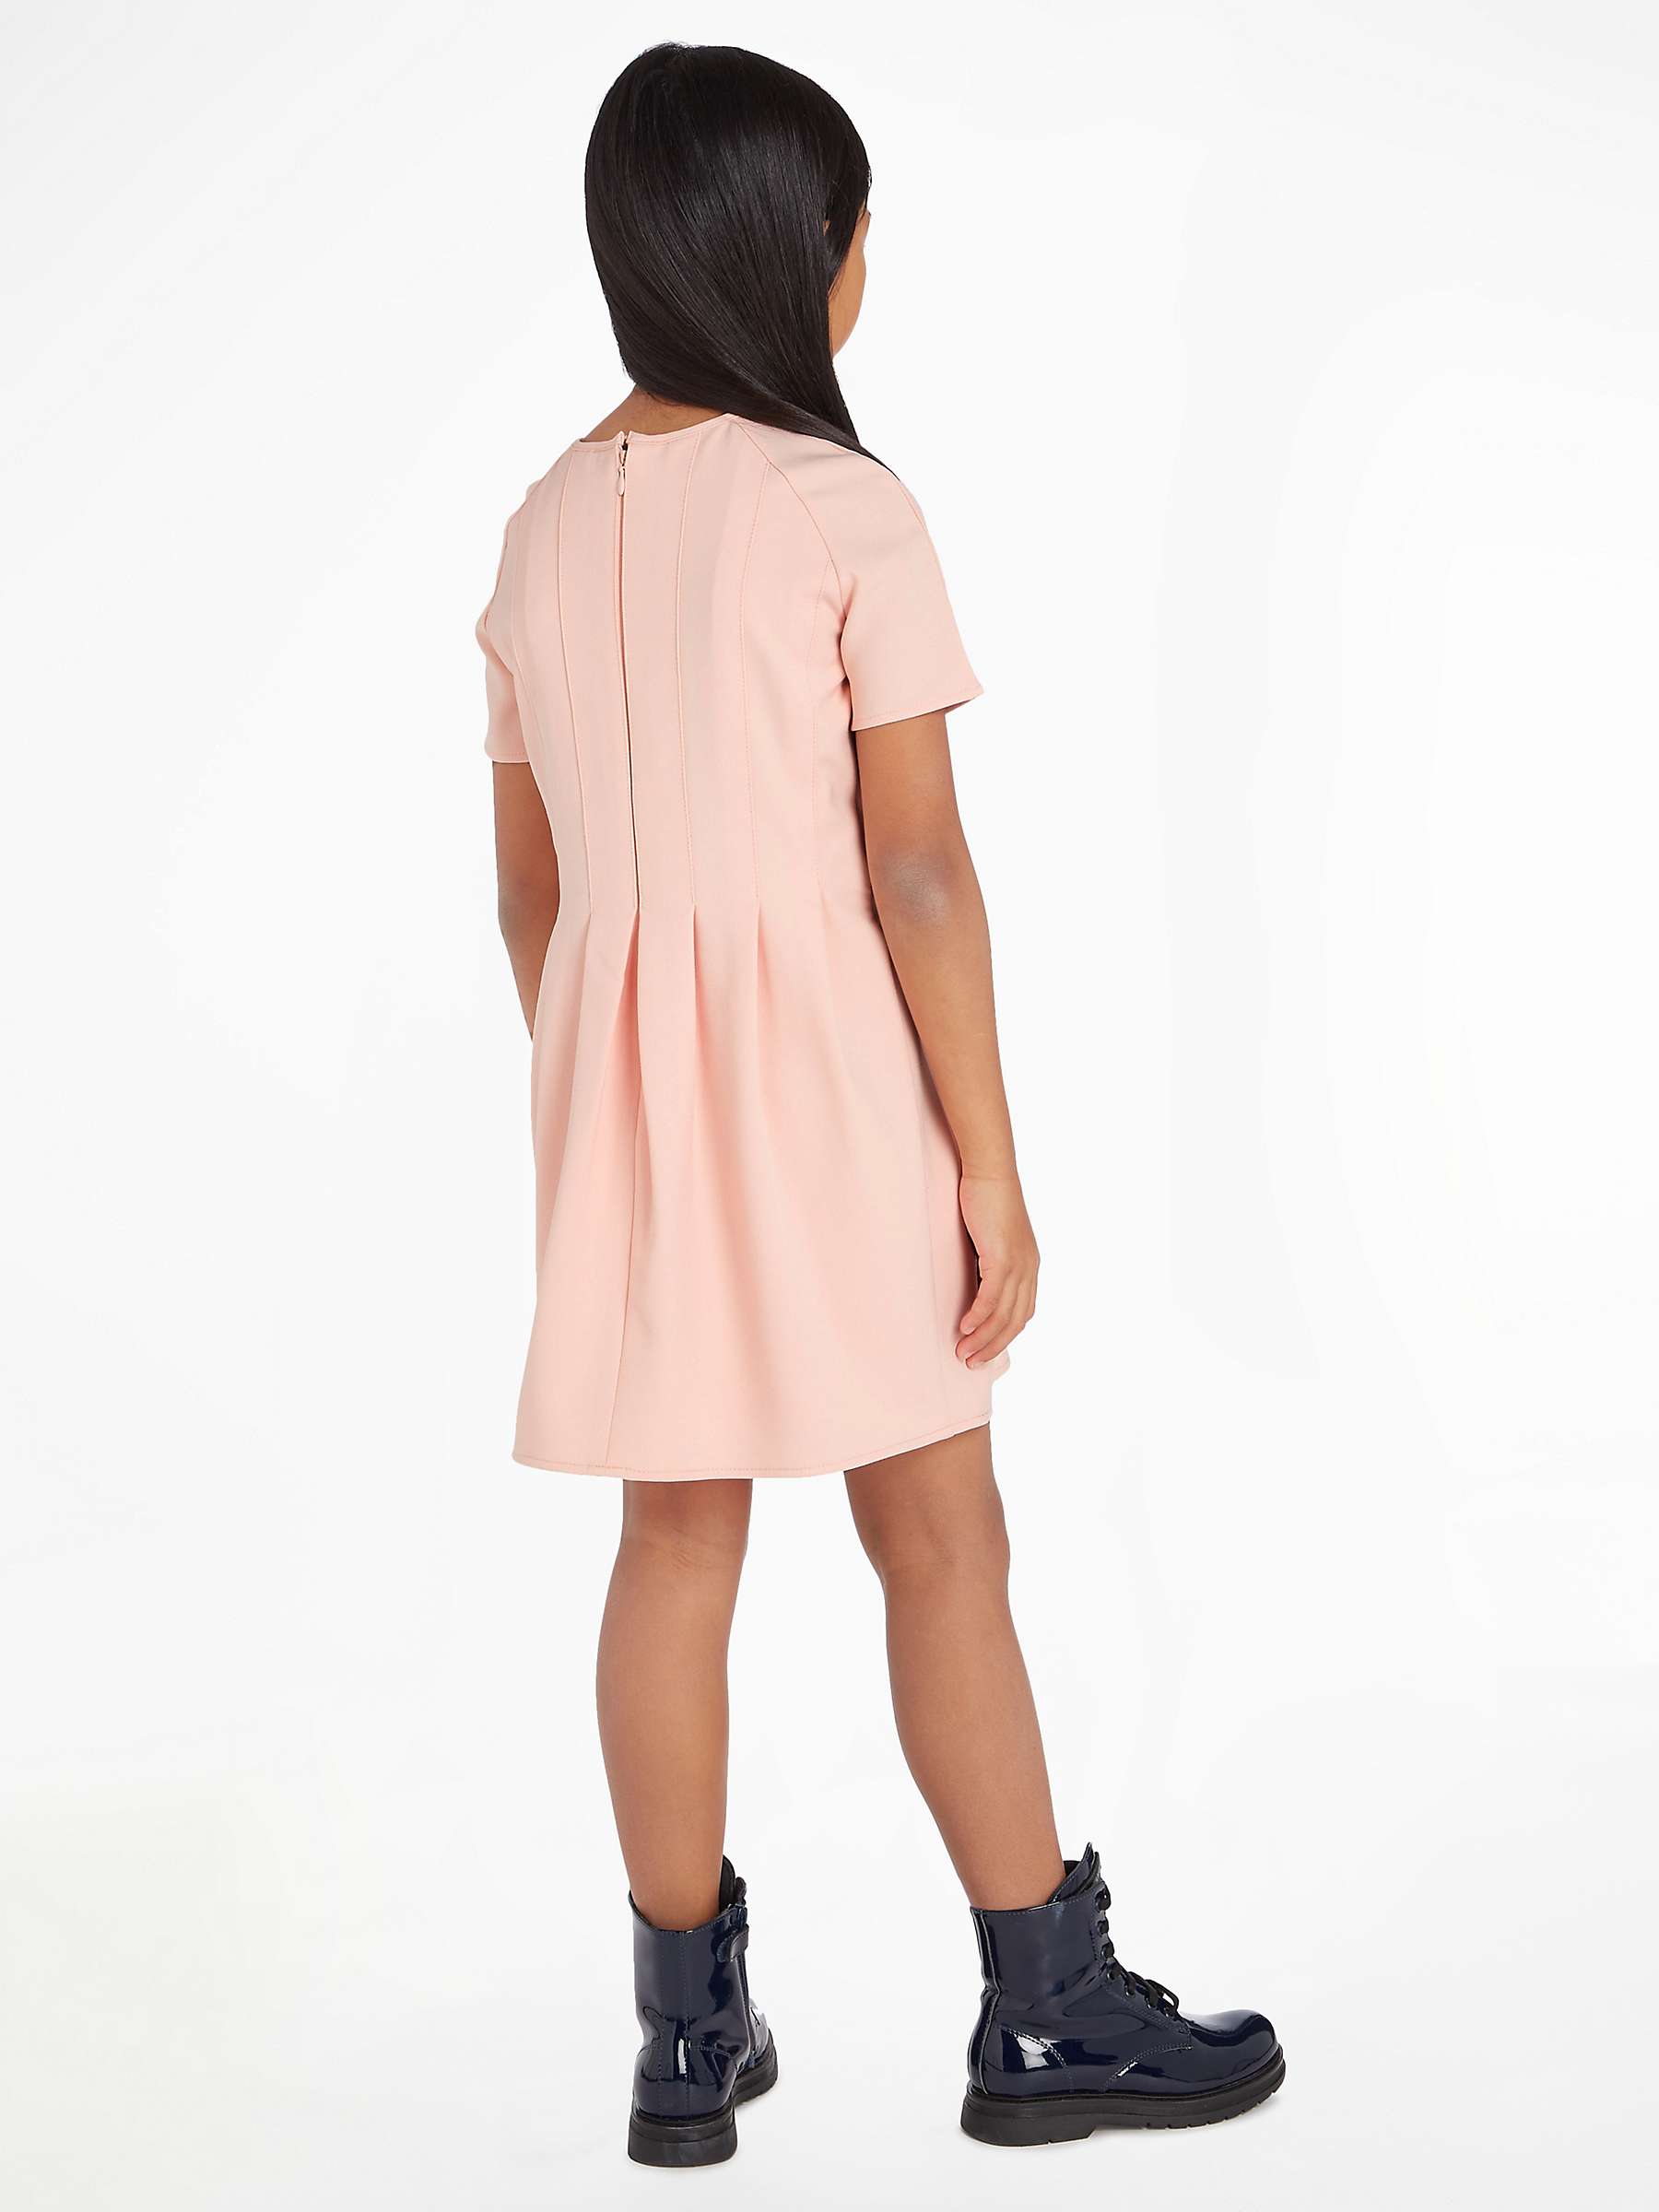 Buy Calvin Klein Jeans Kids' Pleated Skater Dress, Faint Blossom Online at johnlewis.com